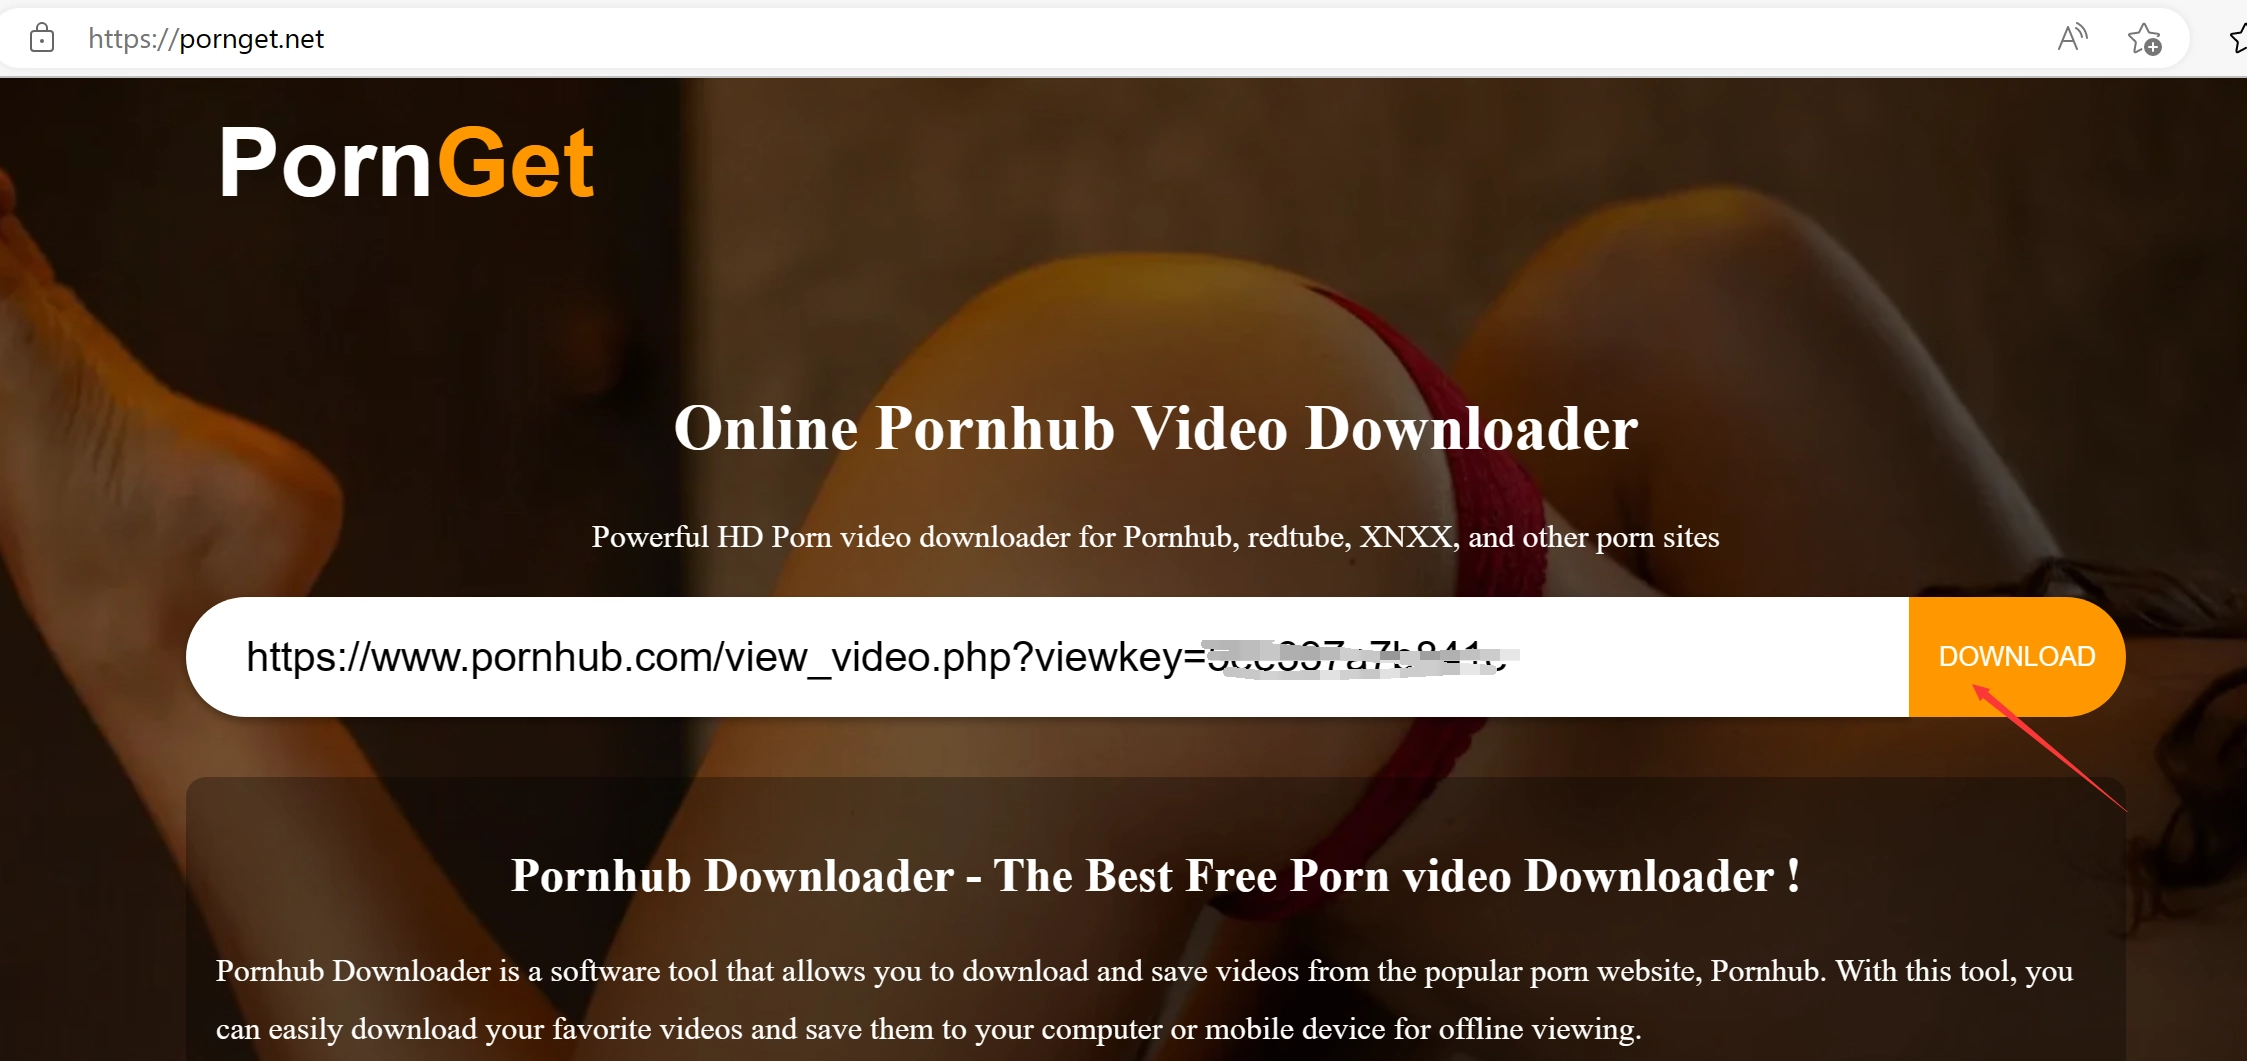 how to use online pornhub downloader step 1